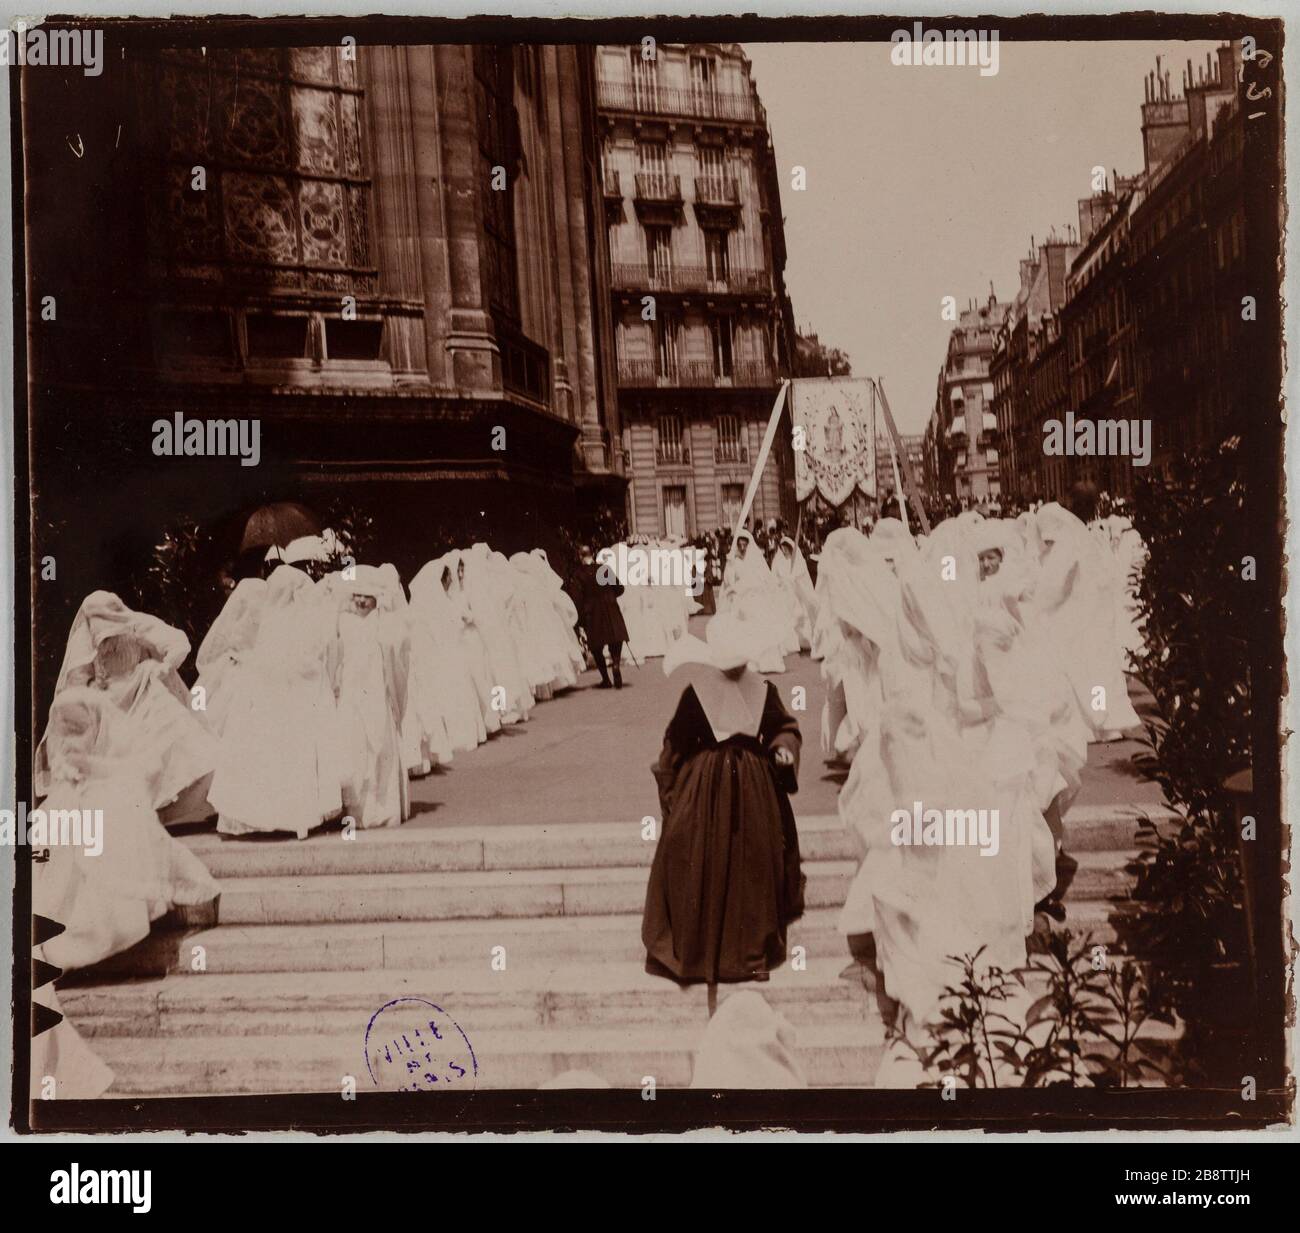 religious event, Paris. 'Manifestation religieuse, Paris'. Photographie anonyme. Aristotype. Paris, musée Carnavalet. Stock Photo